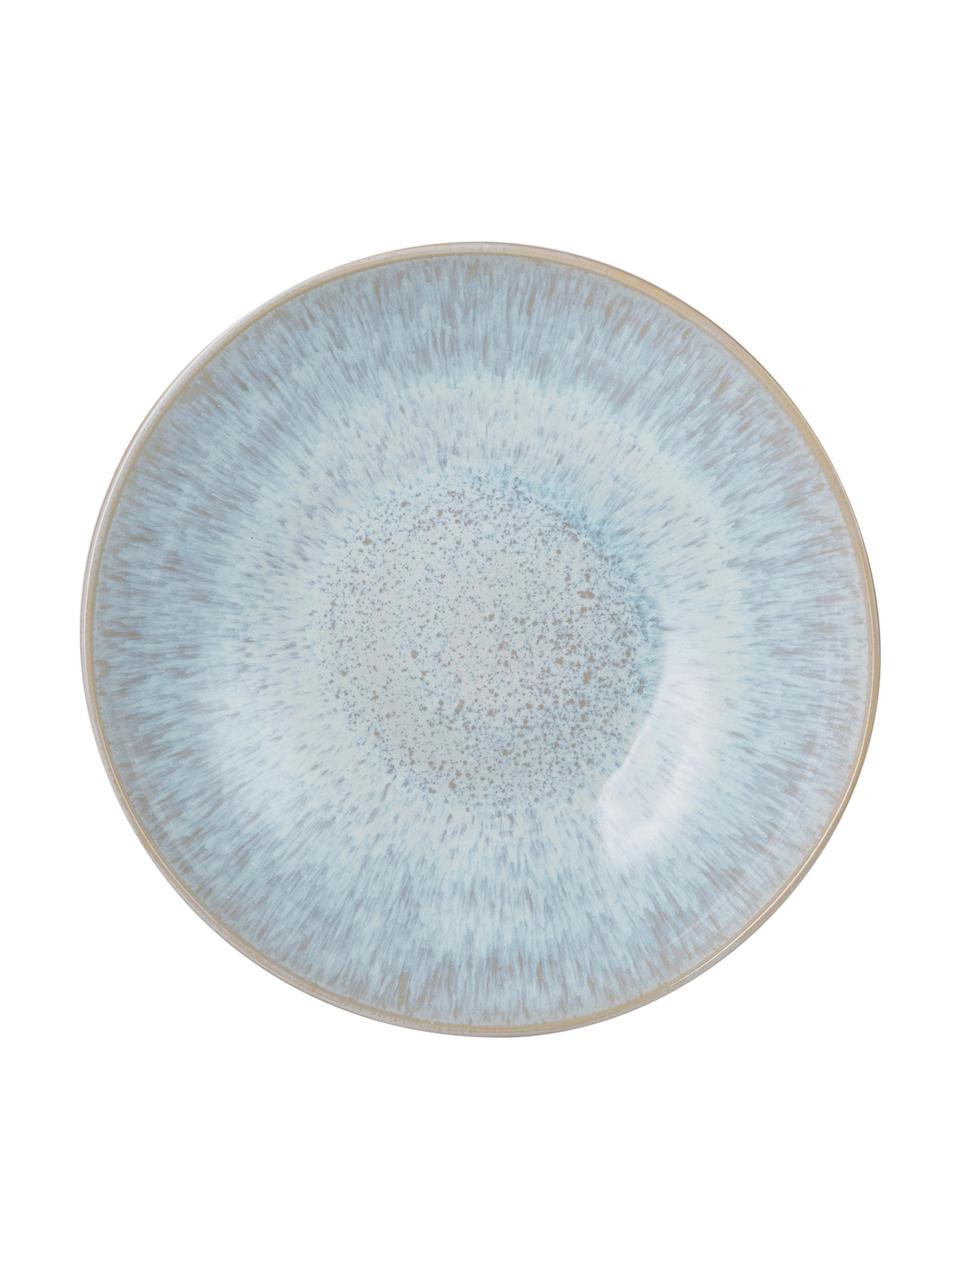 Handbeschilderde serveerschaal Areia met reactief glazuur, Ø 22 cm, Keramiek, Lichtblauw, gebroken wit, lichtbeige, Ø 22 x H 5 cm